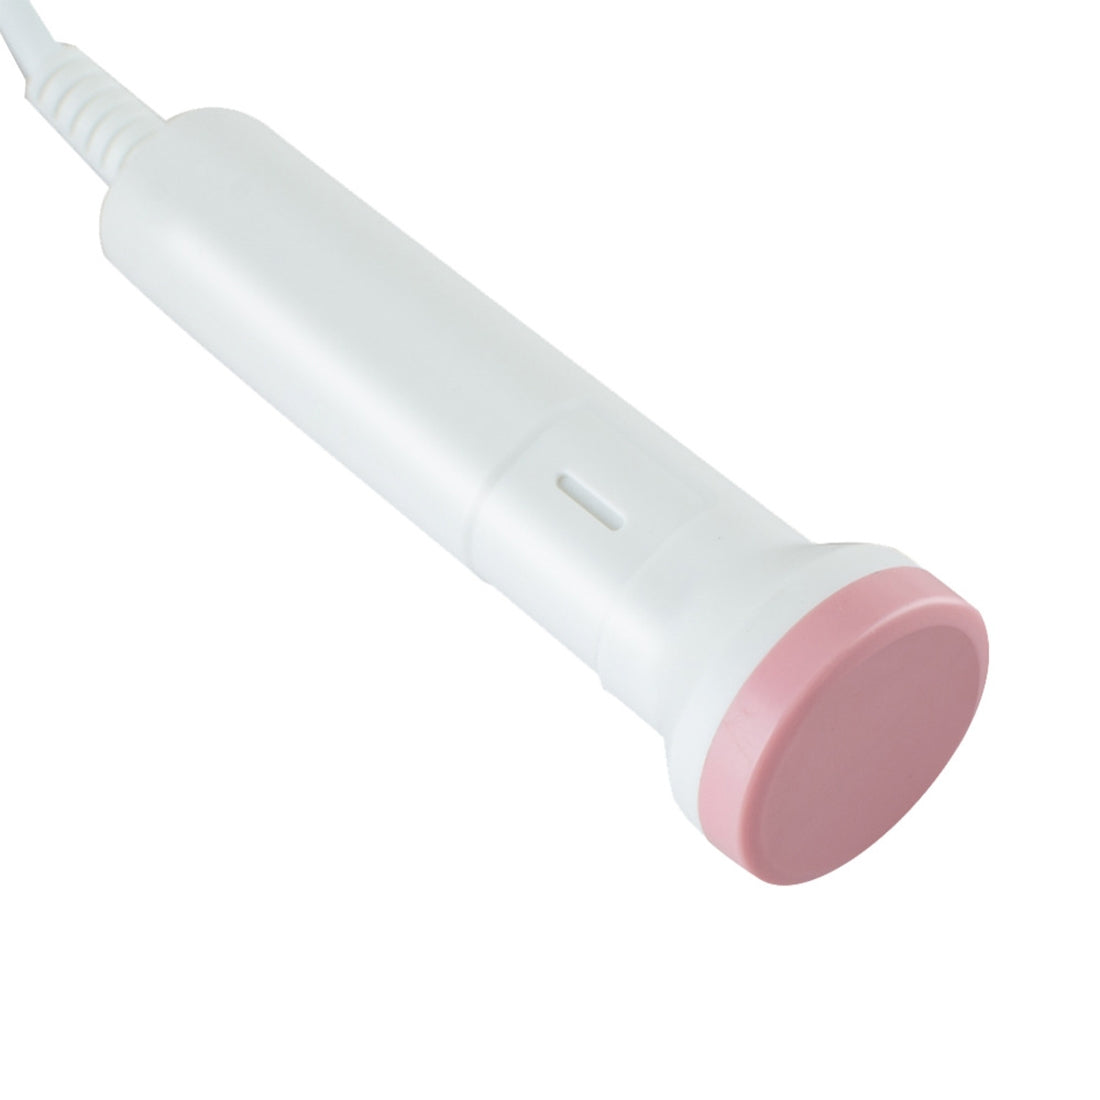 FD-03 Ultrasonic Portable Detector Fetal Doppler Color Display Baby Heart Rate Monitor for Pregnant Women